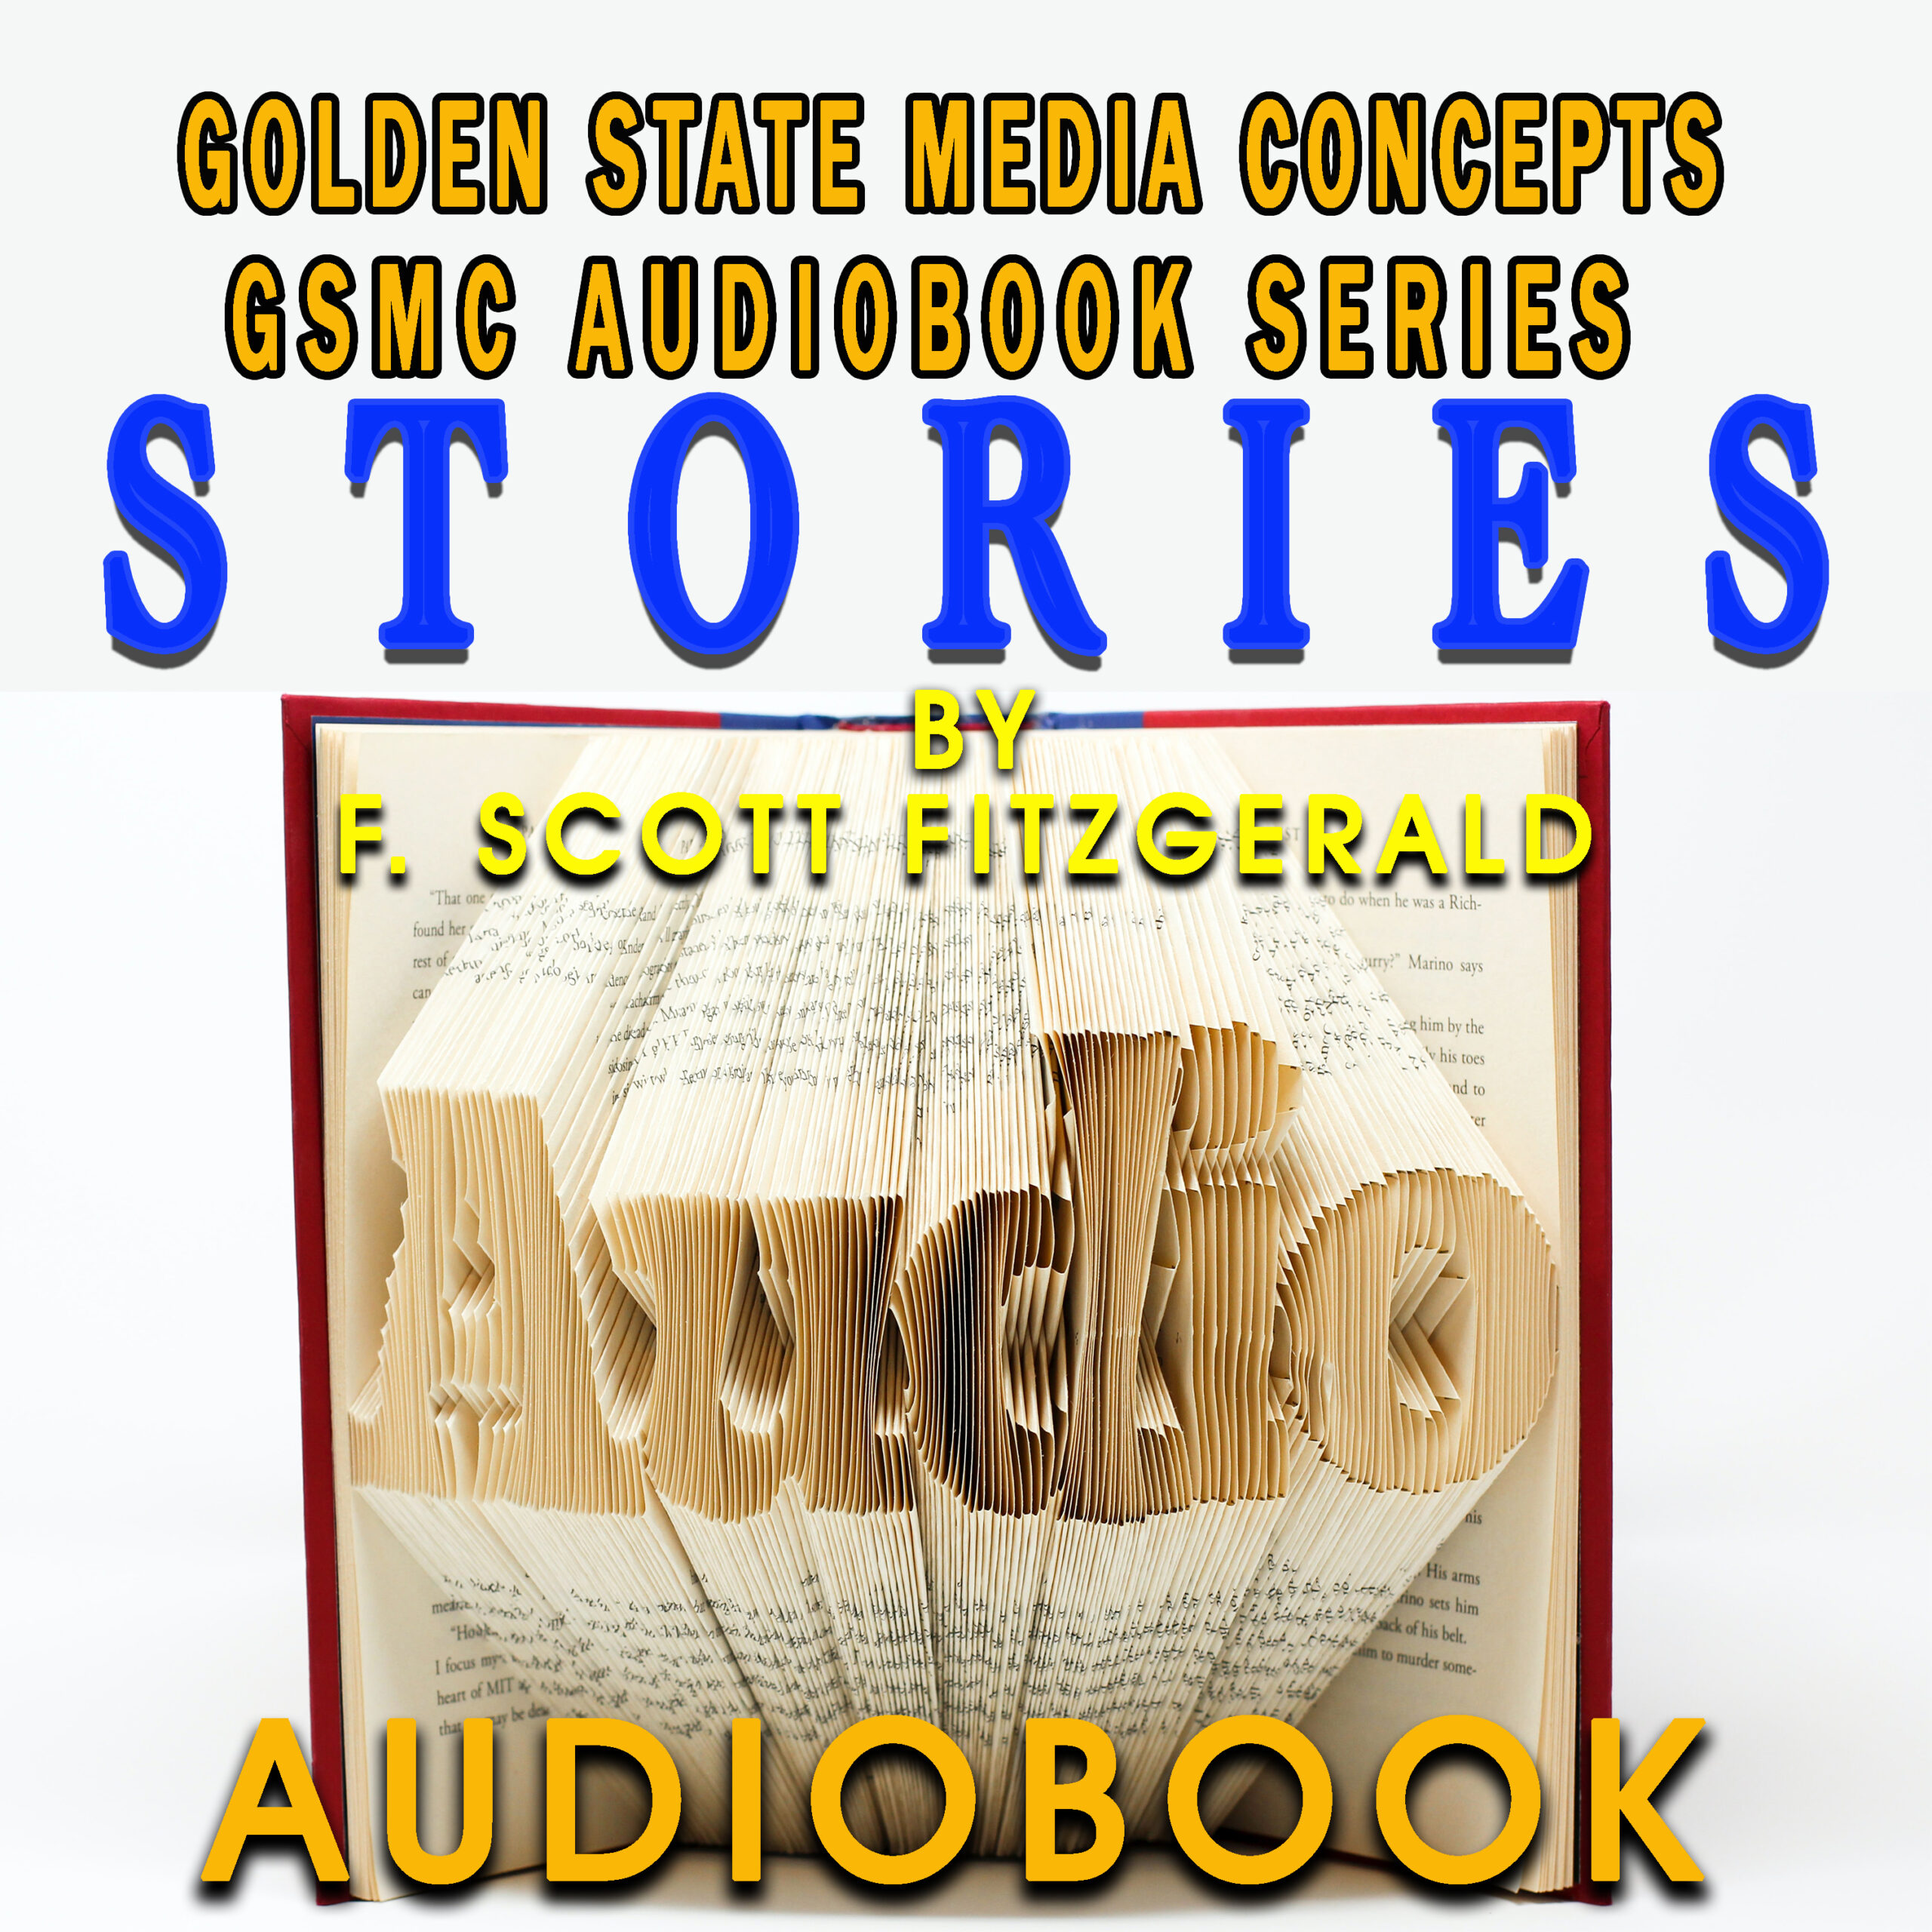 GSMC Audiobook Series: Stories by F. Scott Fitzgerald